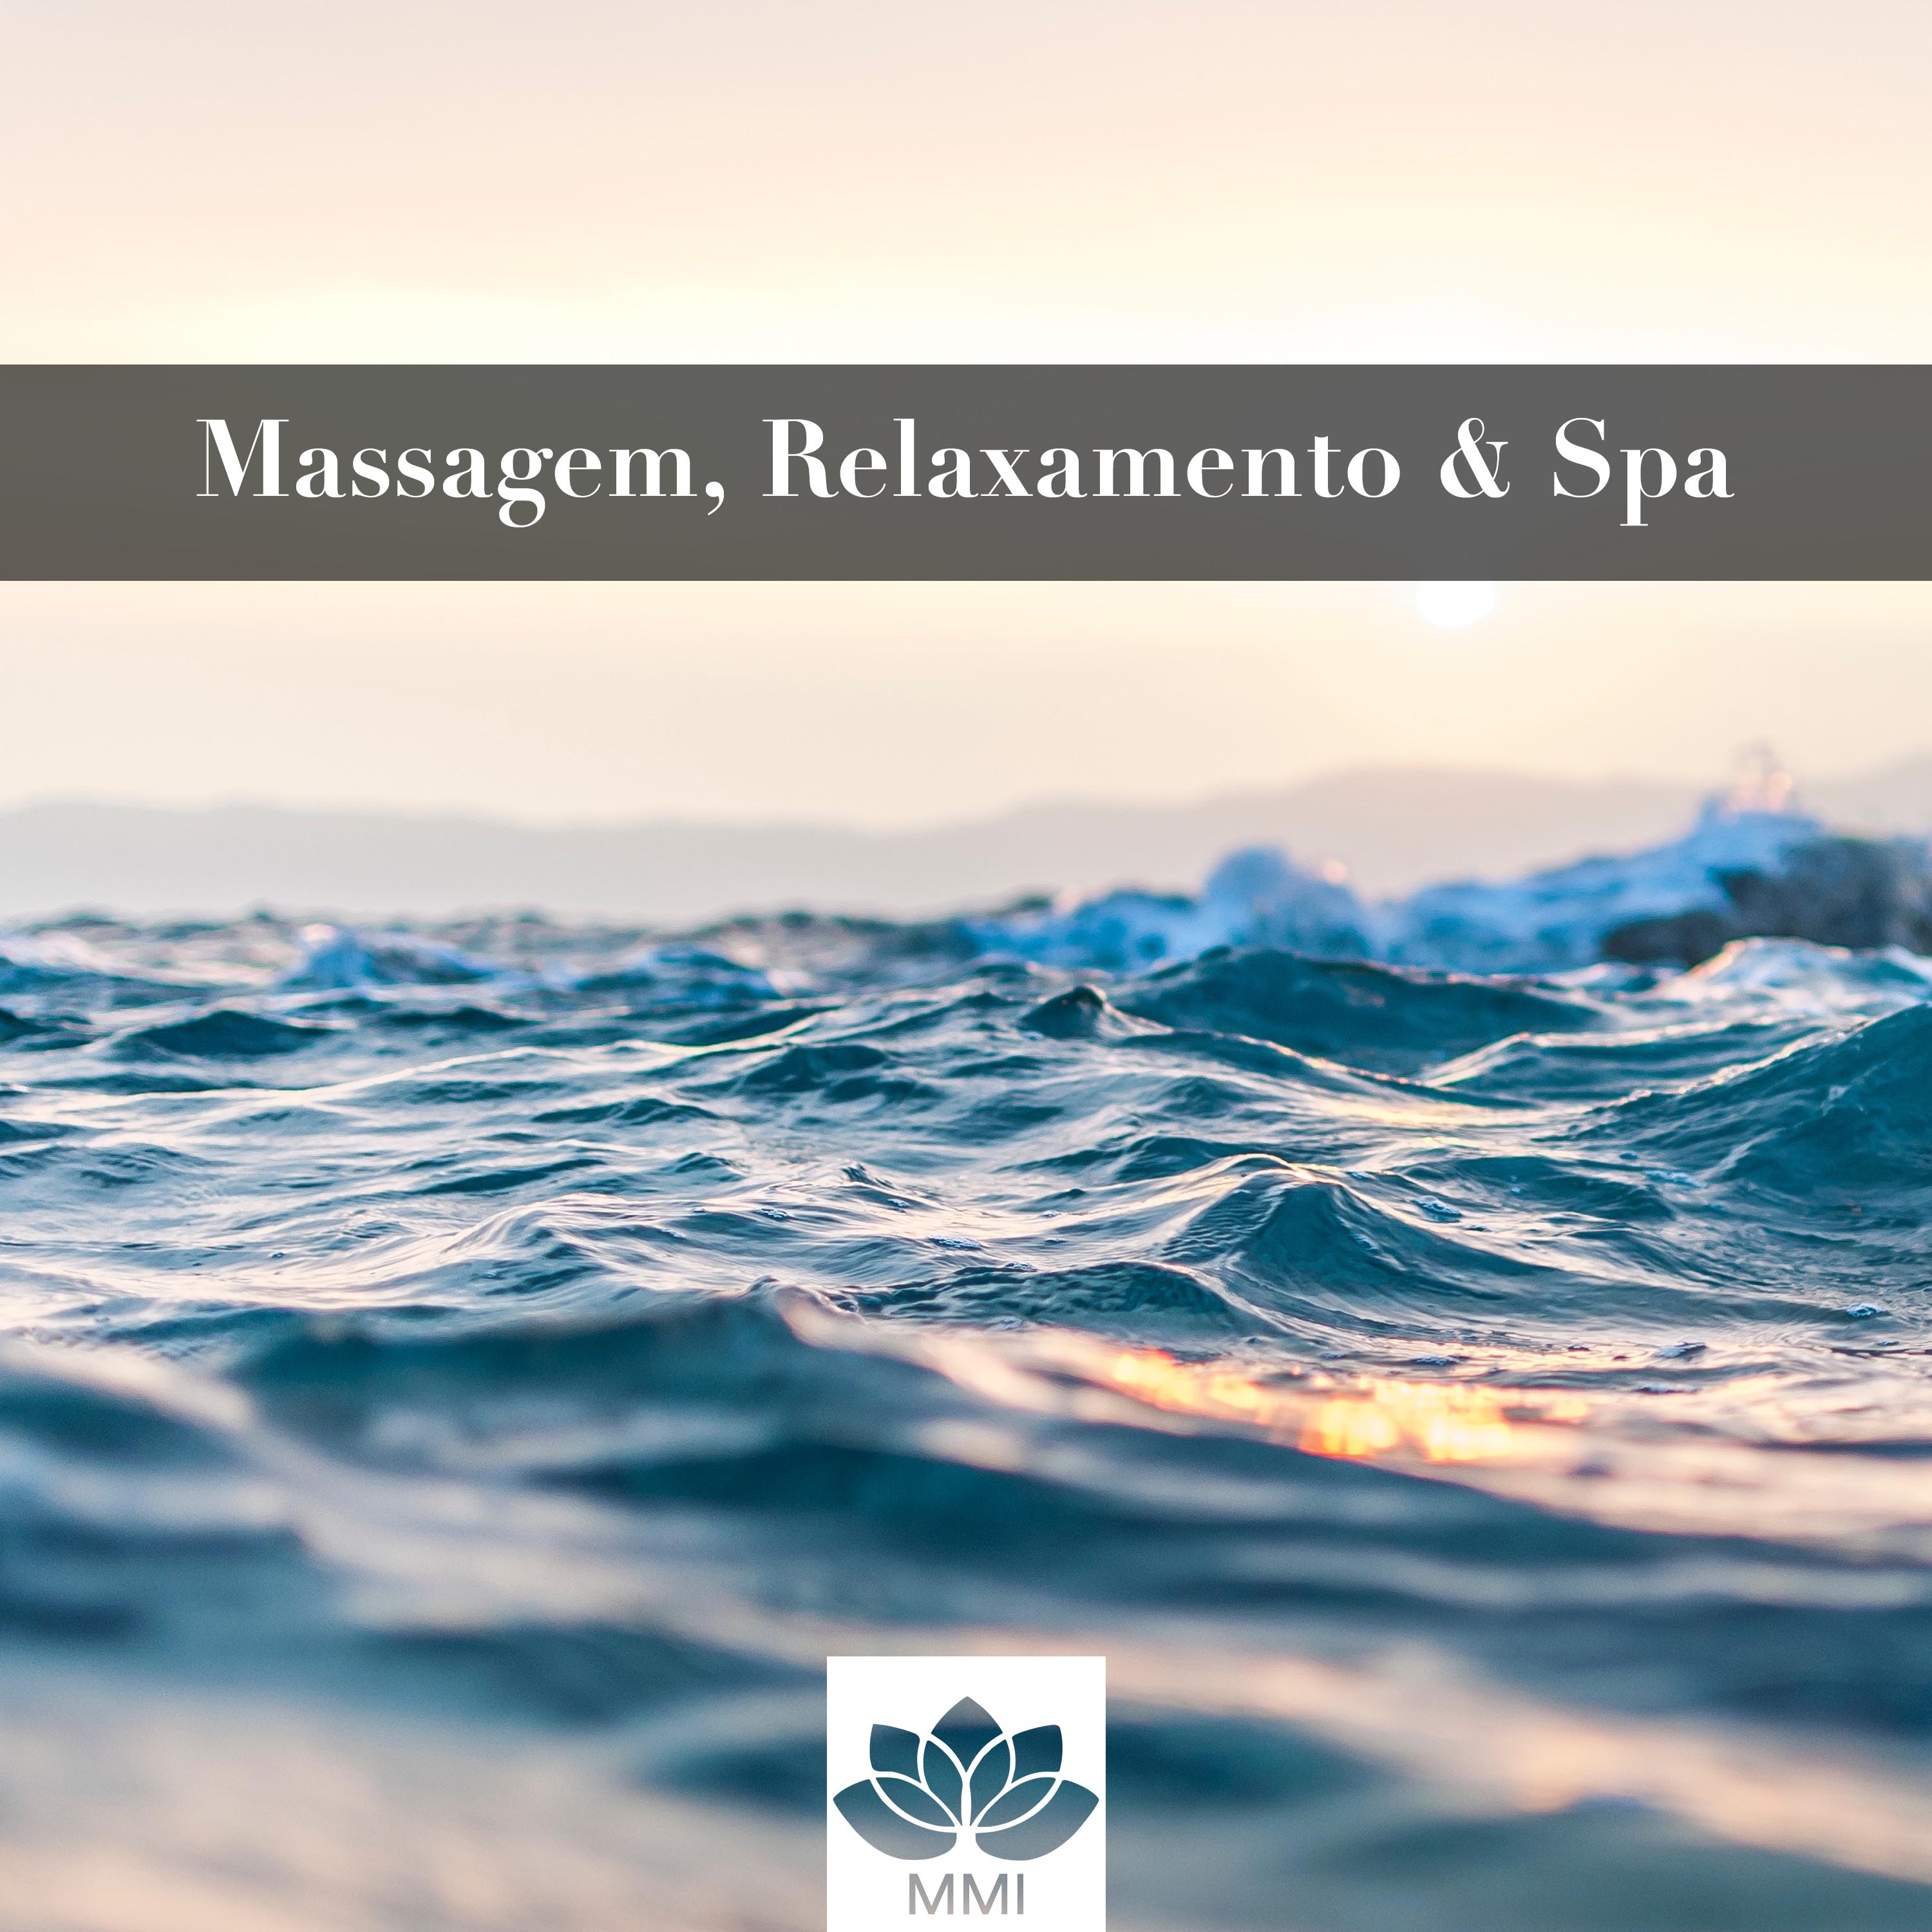 Massagem, Relaxamento  Spa  Yoga, Spa, Musicoterapia, Reflexologia, Shiatsu Massagem, Sons da Natureza para Massoterapia, Mu sica para Meditar